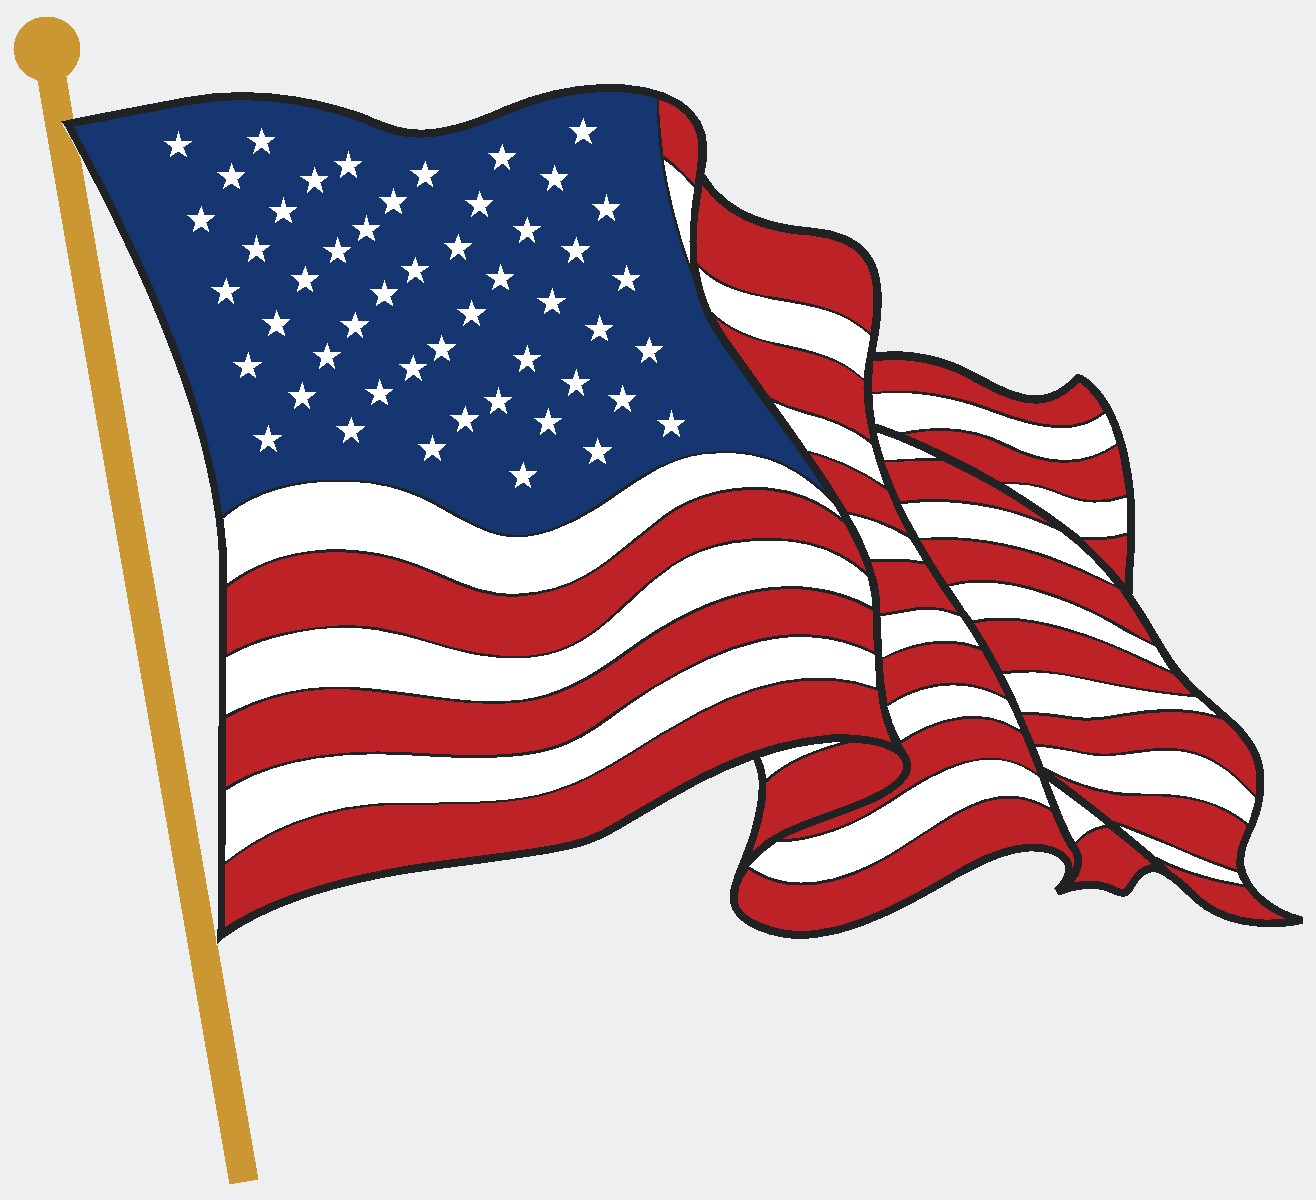 American flag free flag clip art clipart cliparting 3 - Cliparting.com